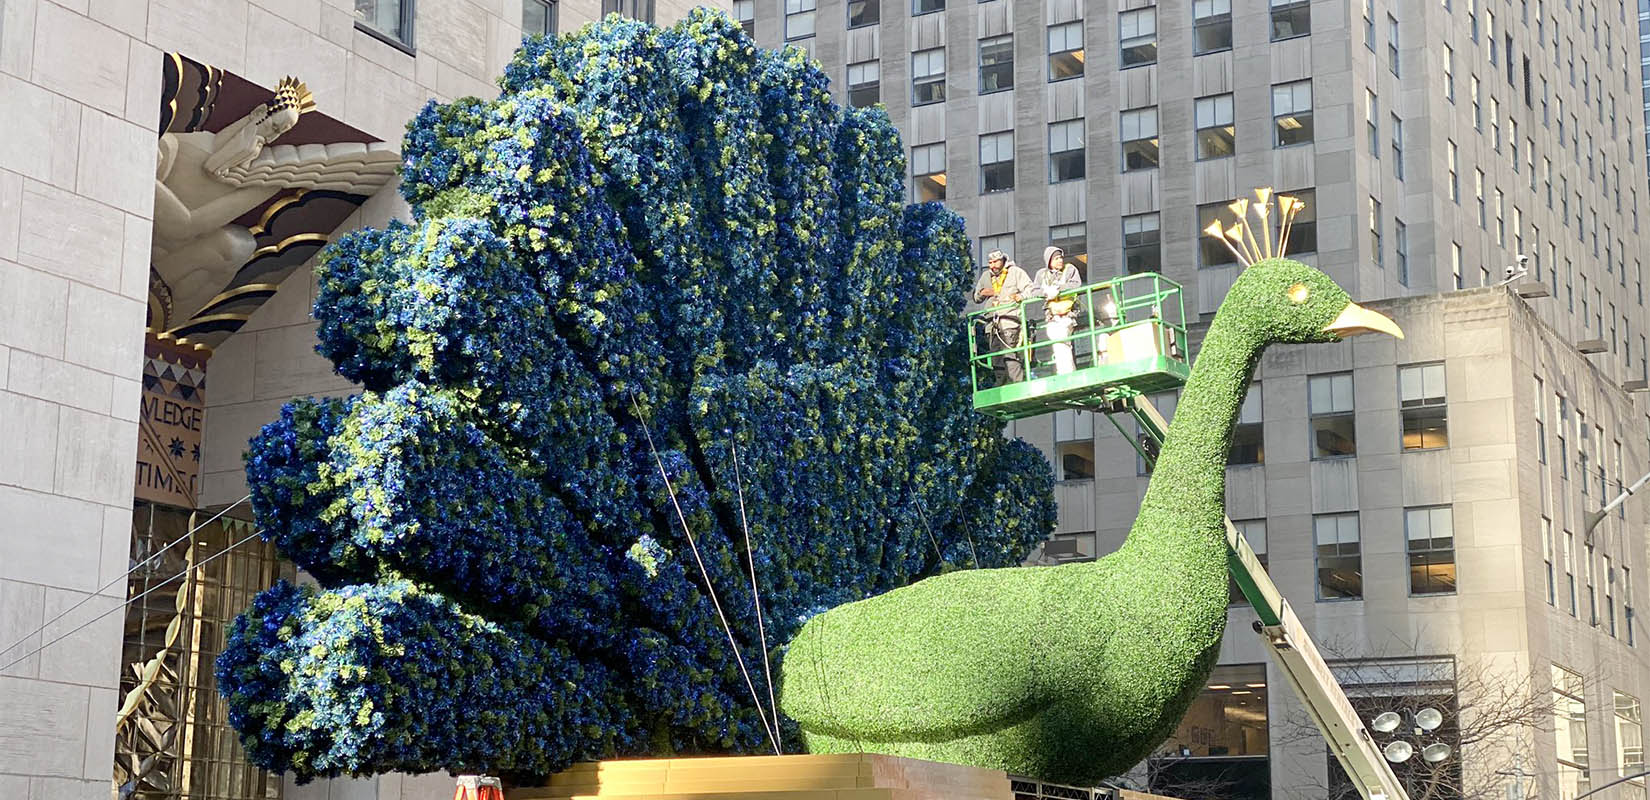 NBC-Peacock-Streaming-Service-Plant-Sculpture-Rockefeller-Center-NYC-1